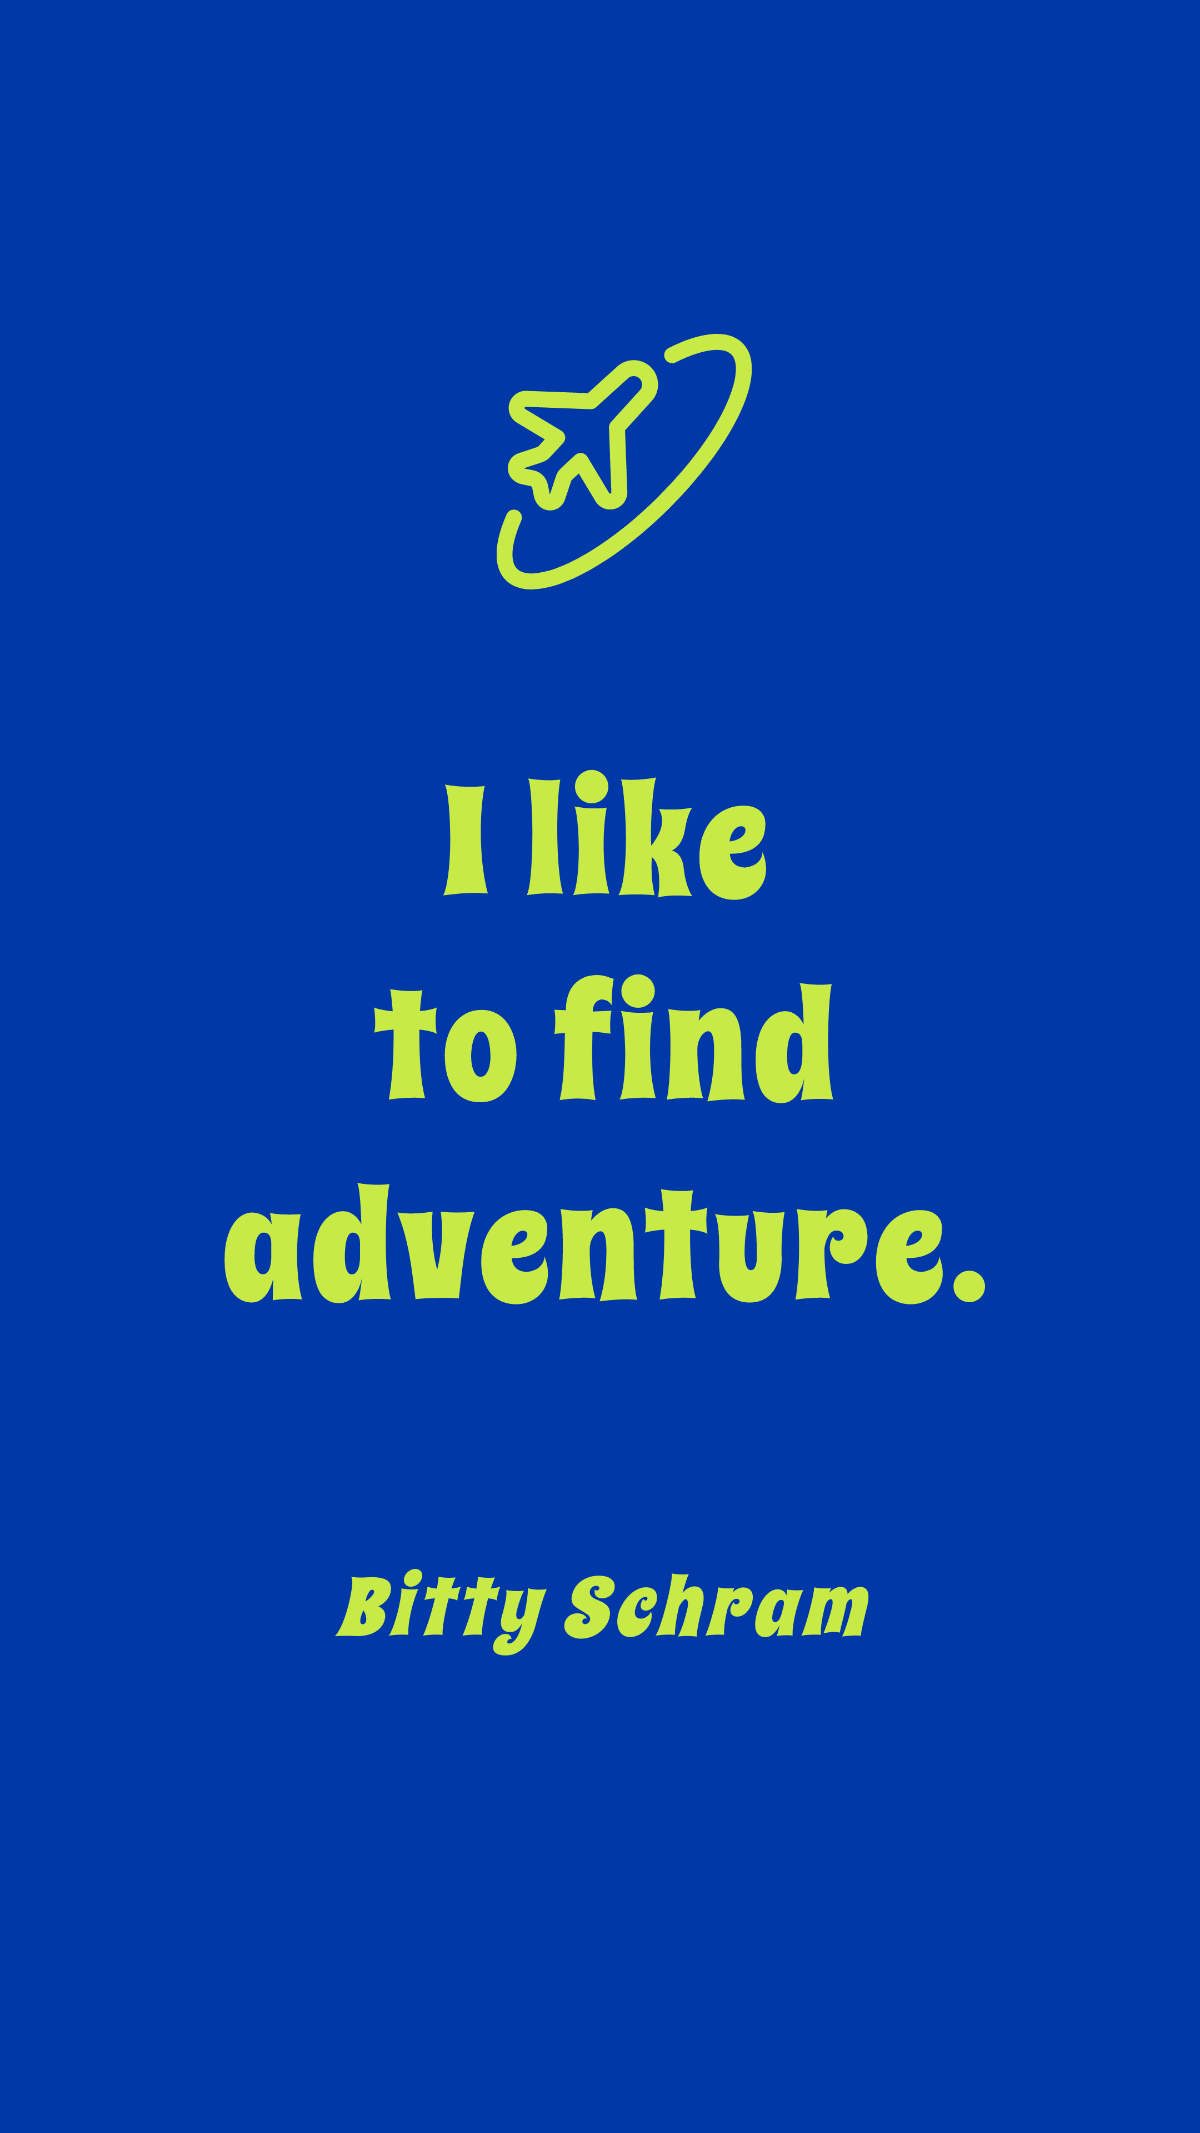 Free Bitty Schram - I like to find adventure. Template